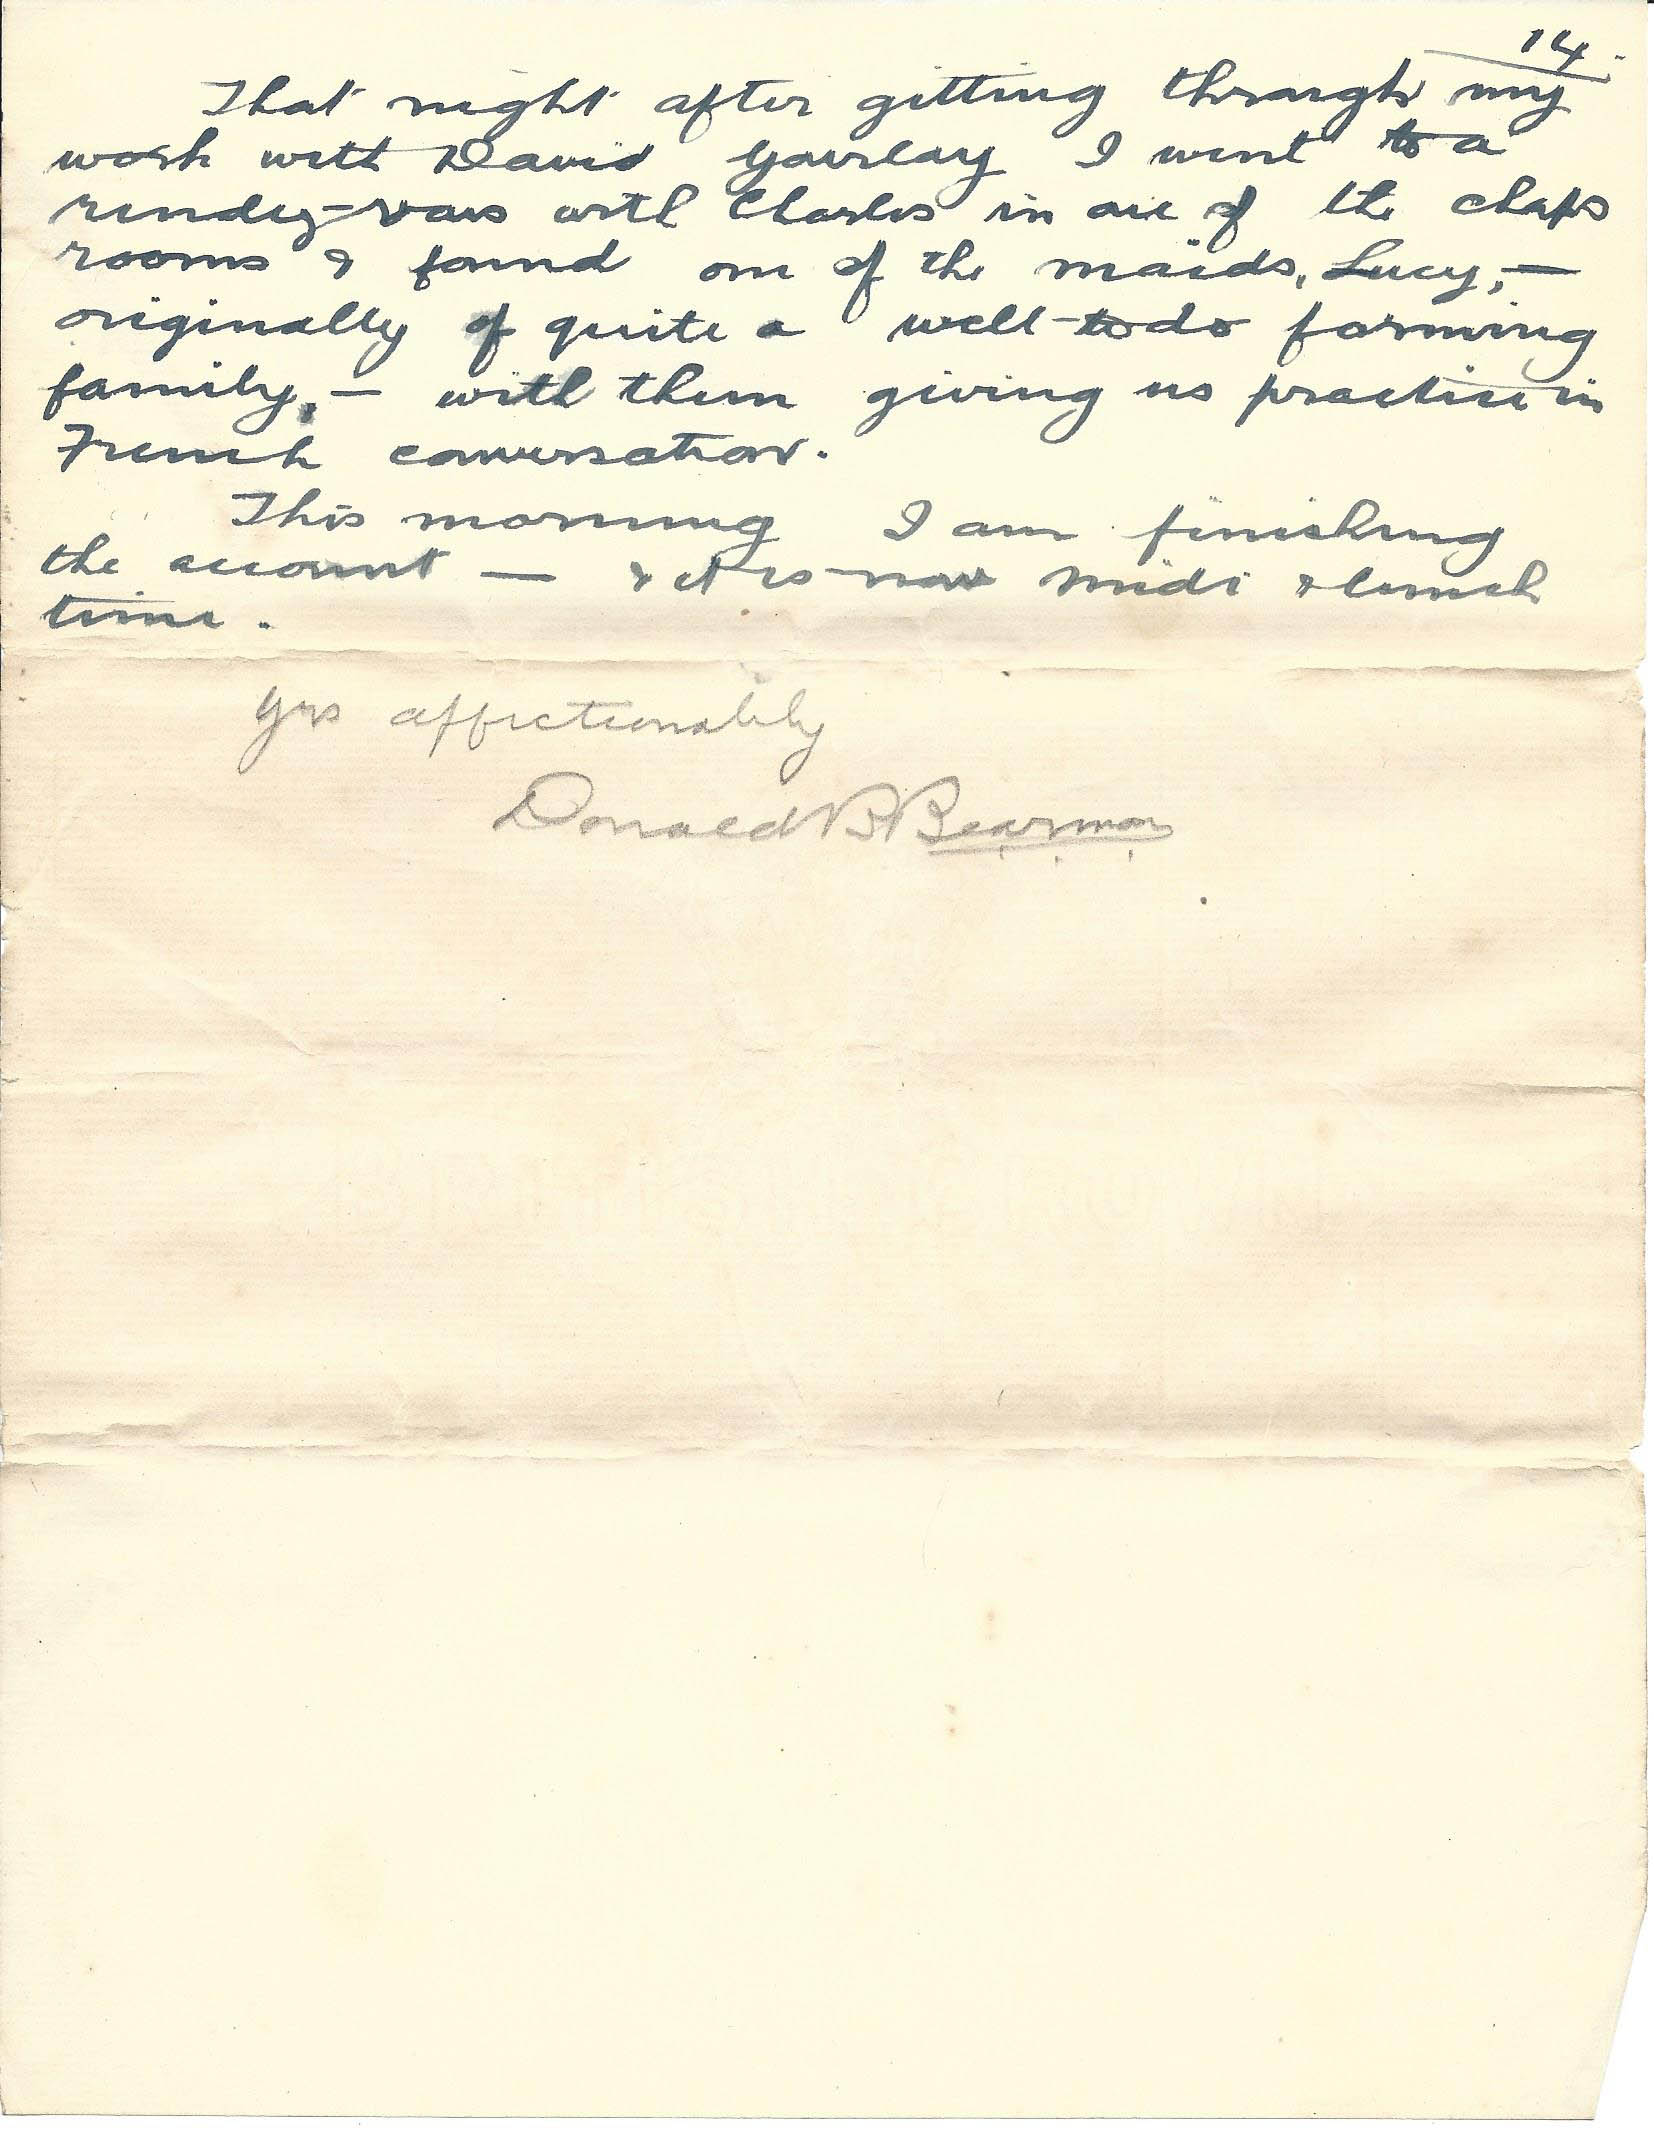 1919-11-13 p14 Donald Bearman to his father Thomas